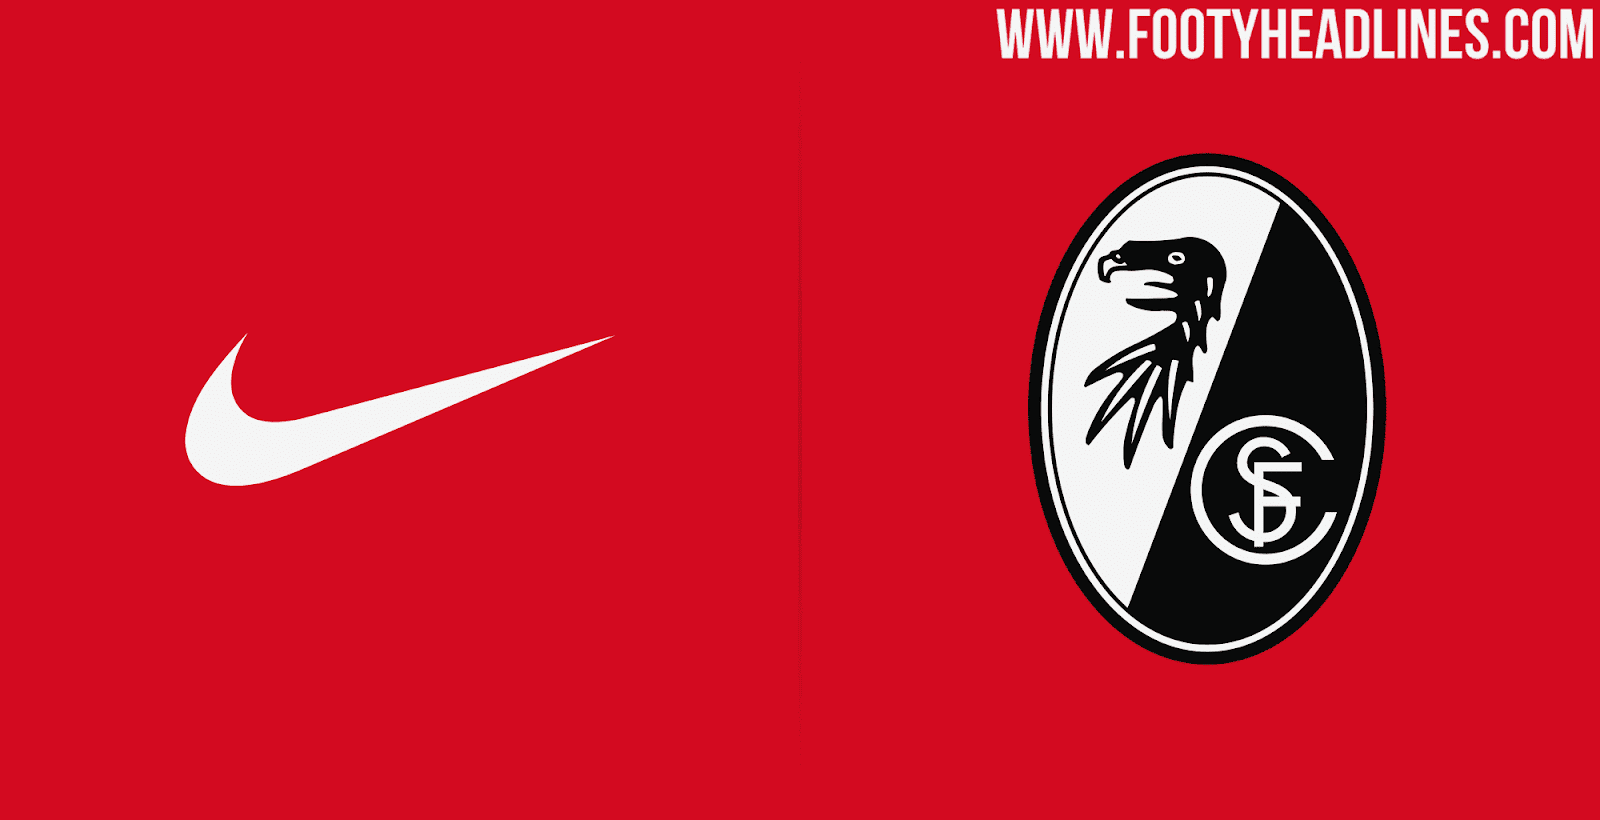 strak Voorwaardelijk vergeven SC Freiburg Announces Nike Kit Deal - Teamwear Kits? - Footy Headlines